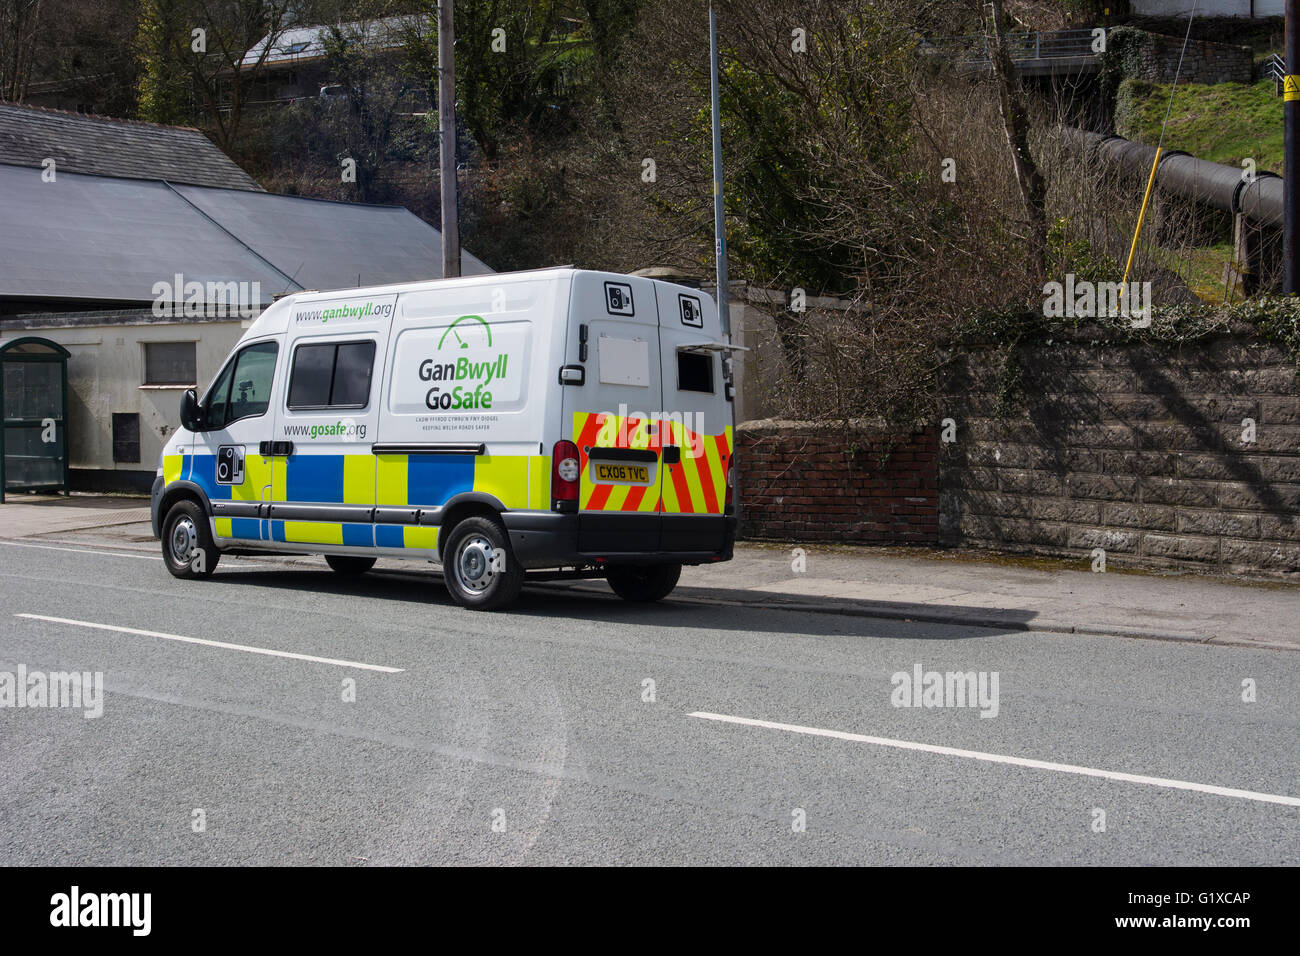 Speed camera van parked in Dolgarrog, Gwynedd, North Wales. Stock Photo